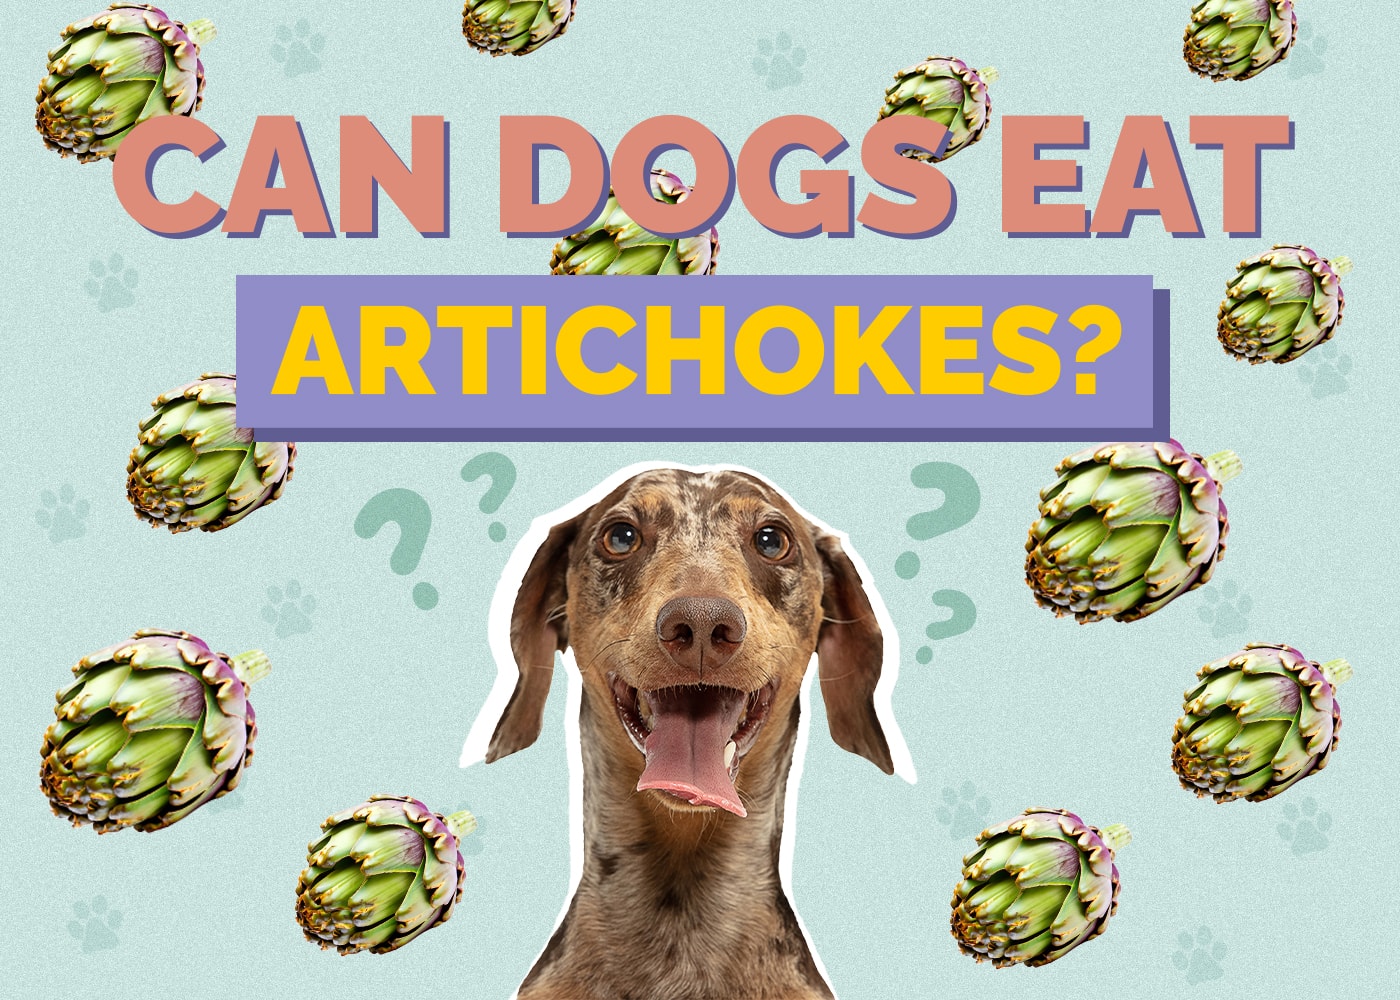 Can Dog Eat artichokes